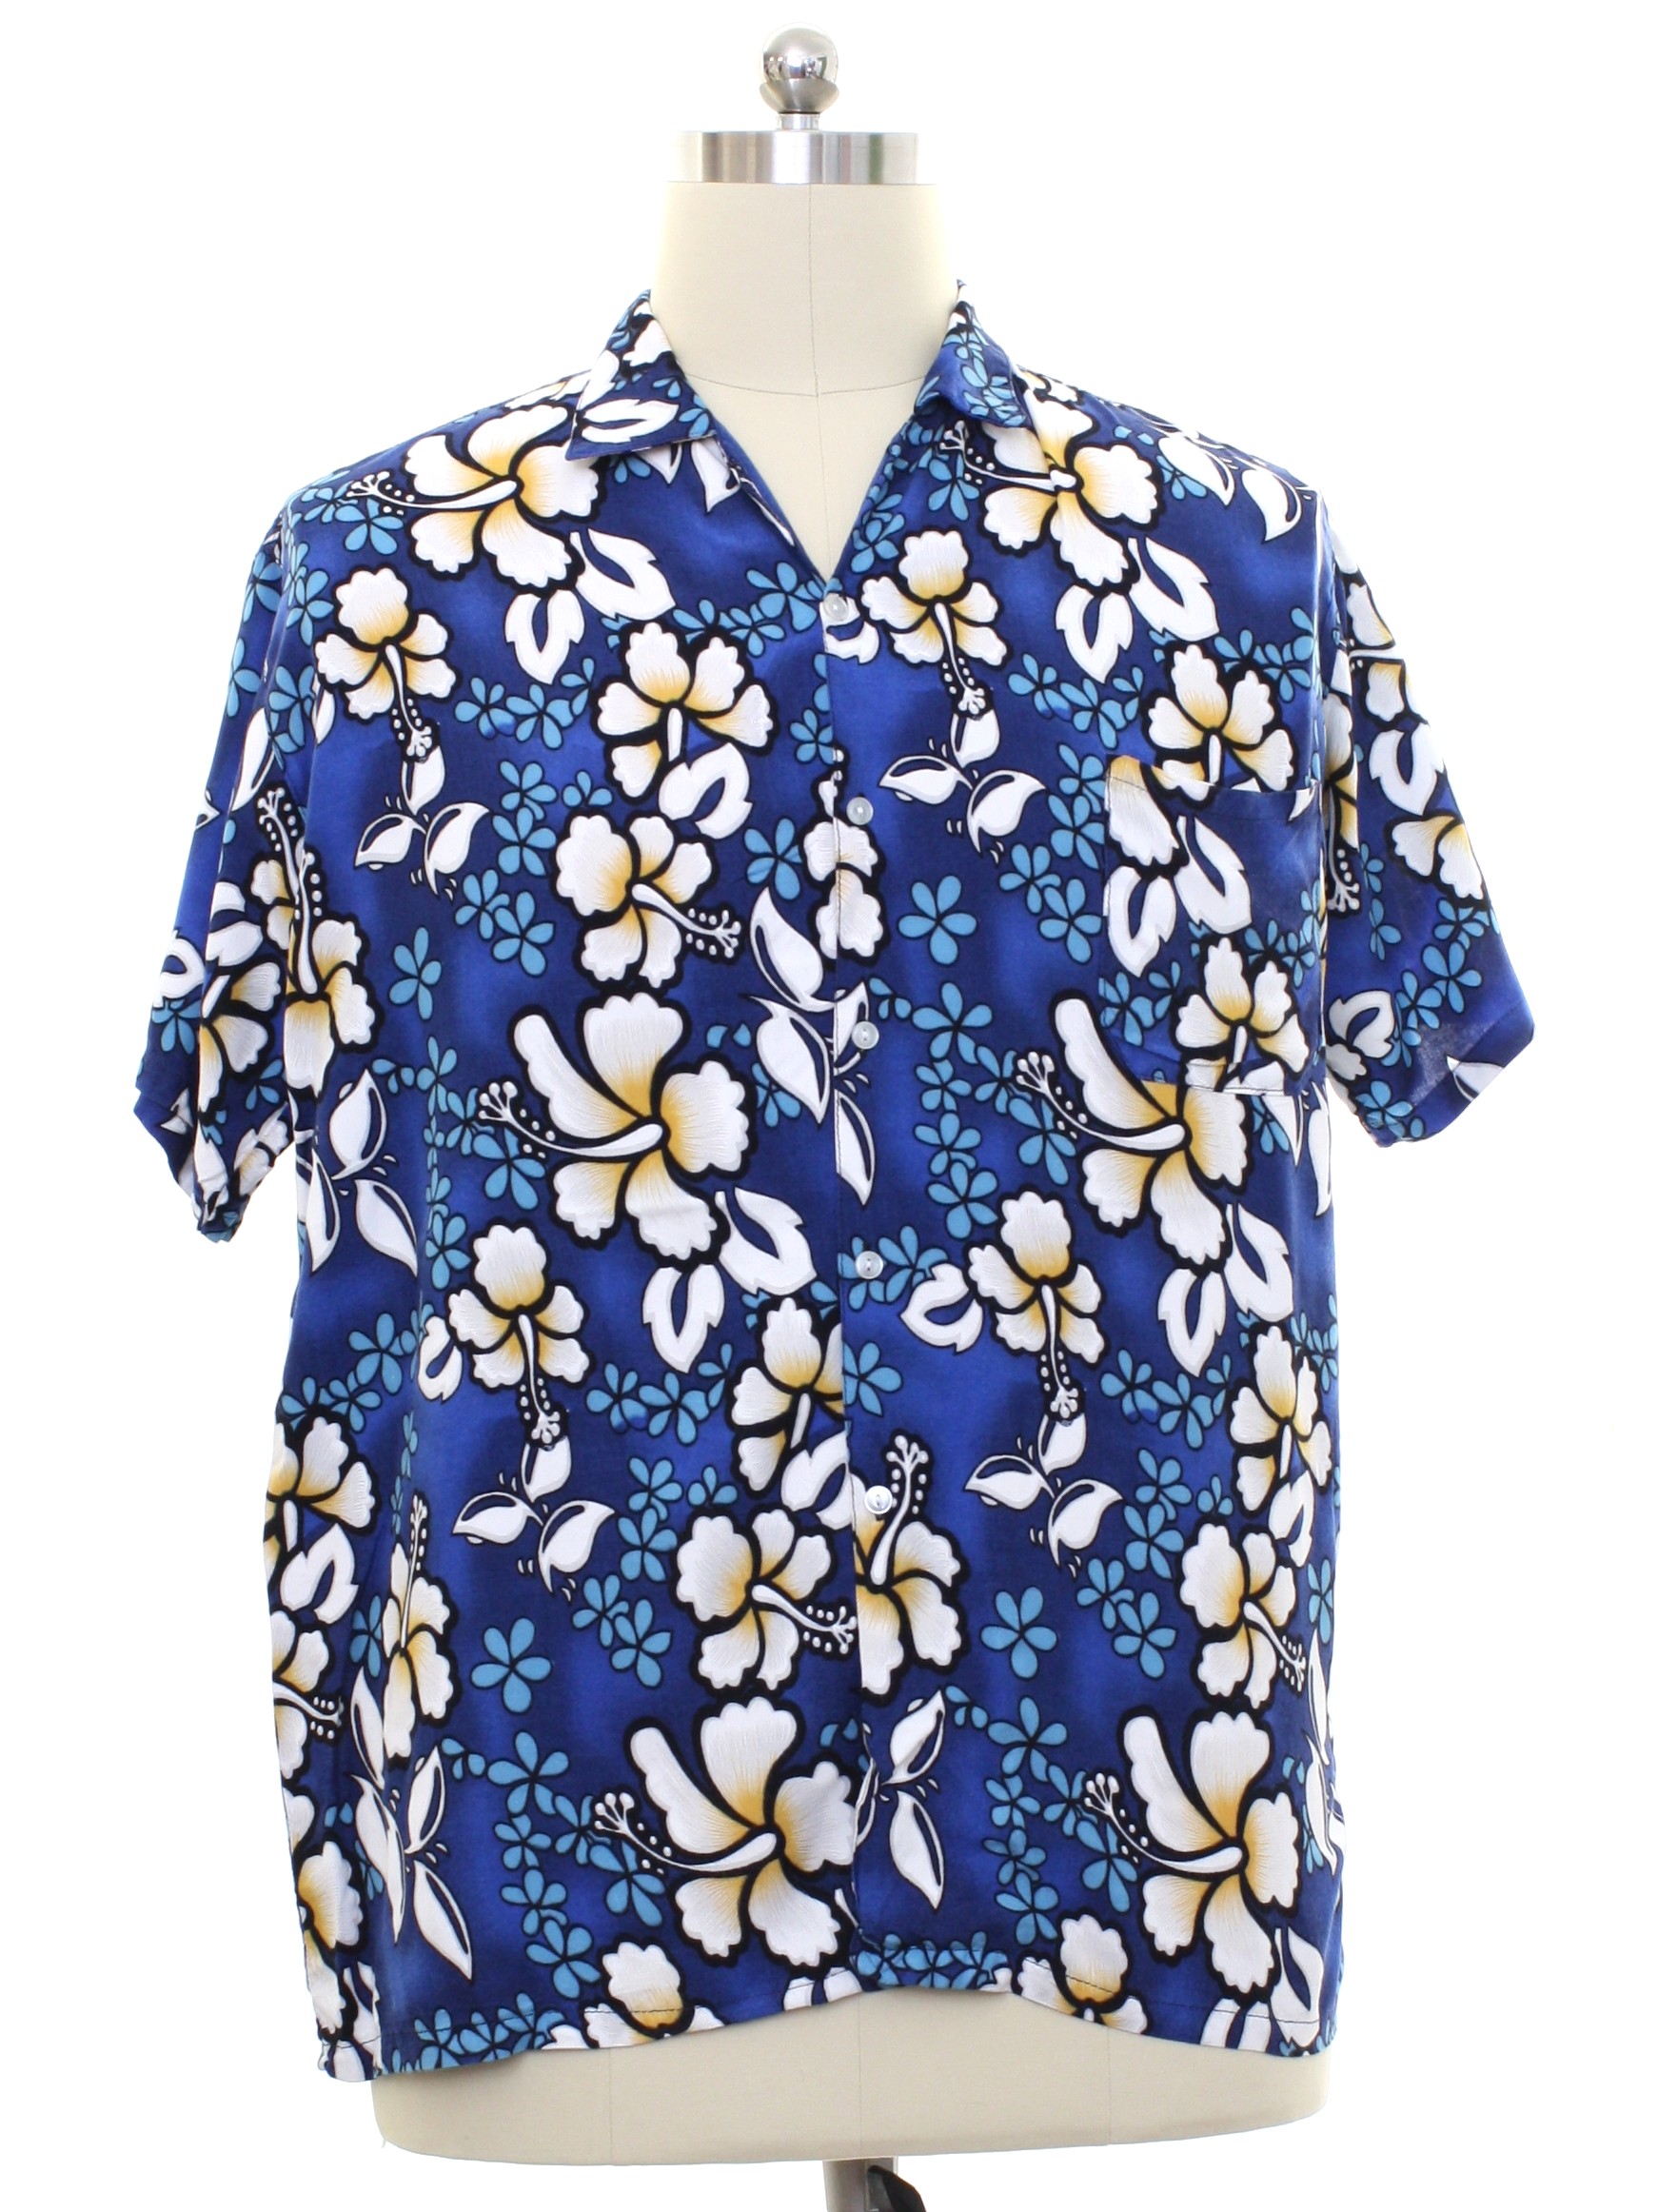 Retro Nineties Hawaiian Shirt: 90s -Pakarang- Mens shaded blue